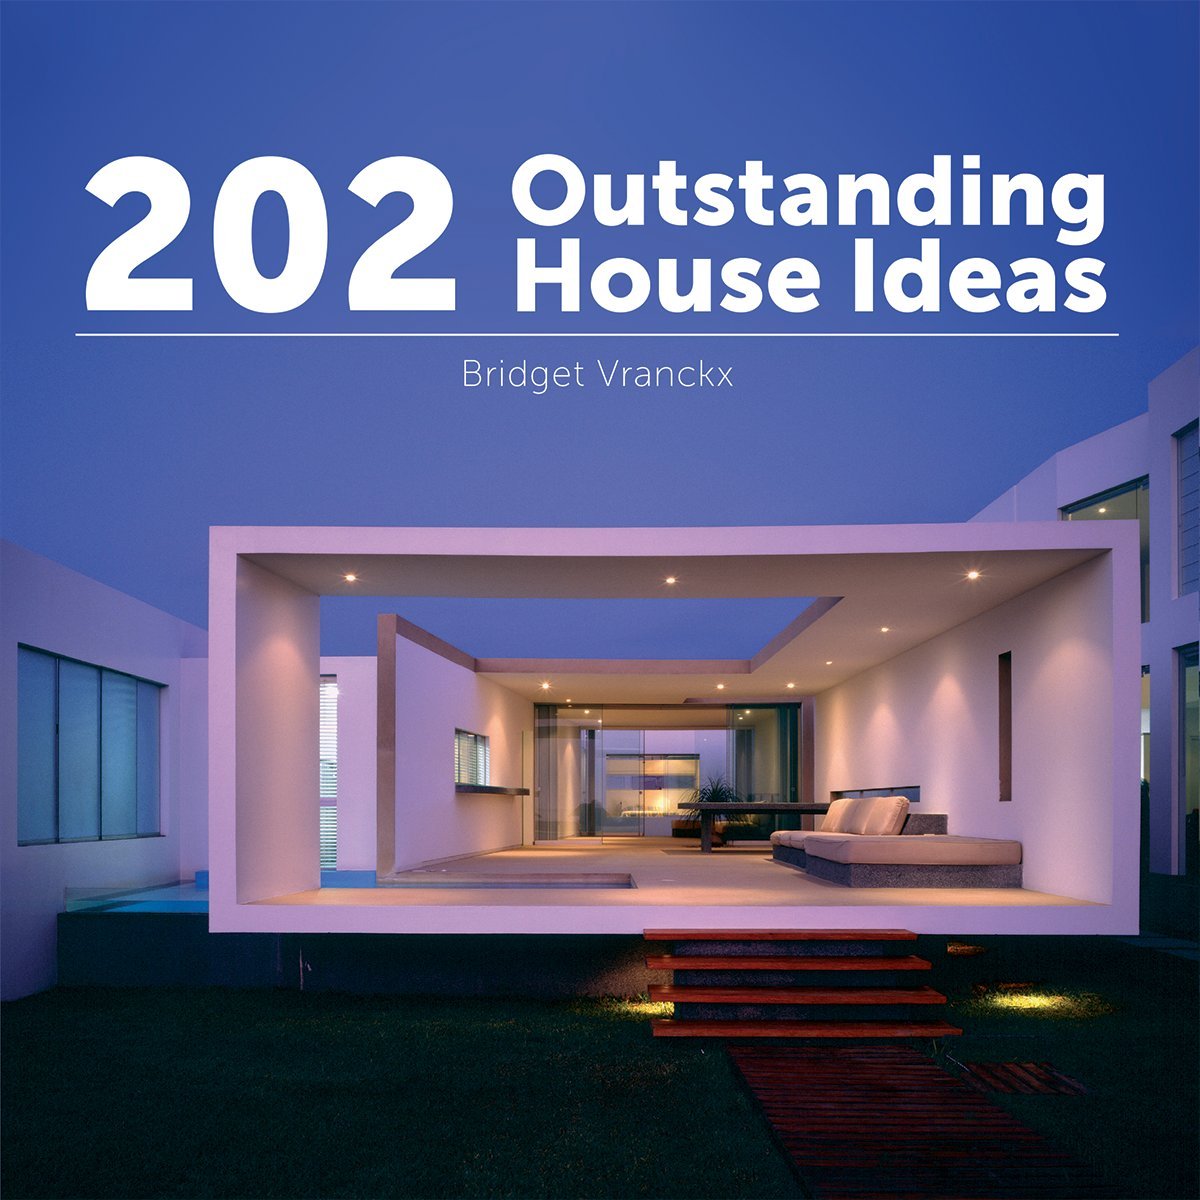 202 Outstanding House Ideas By Bridget Vranckx